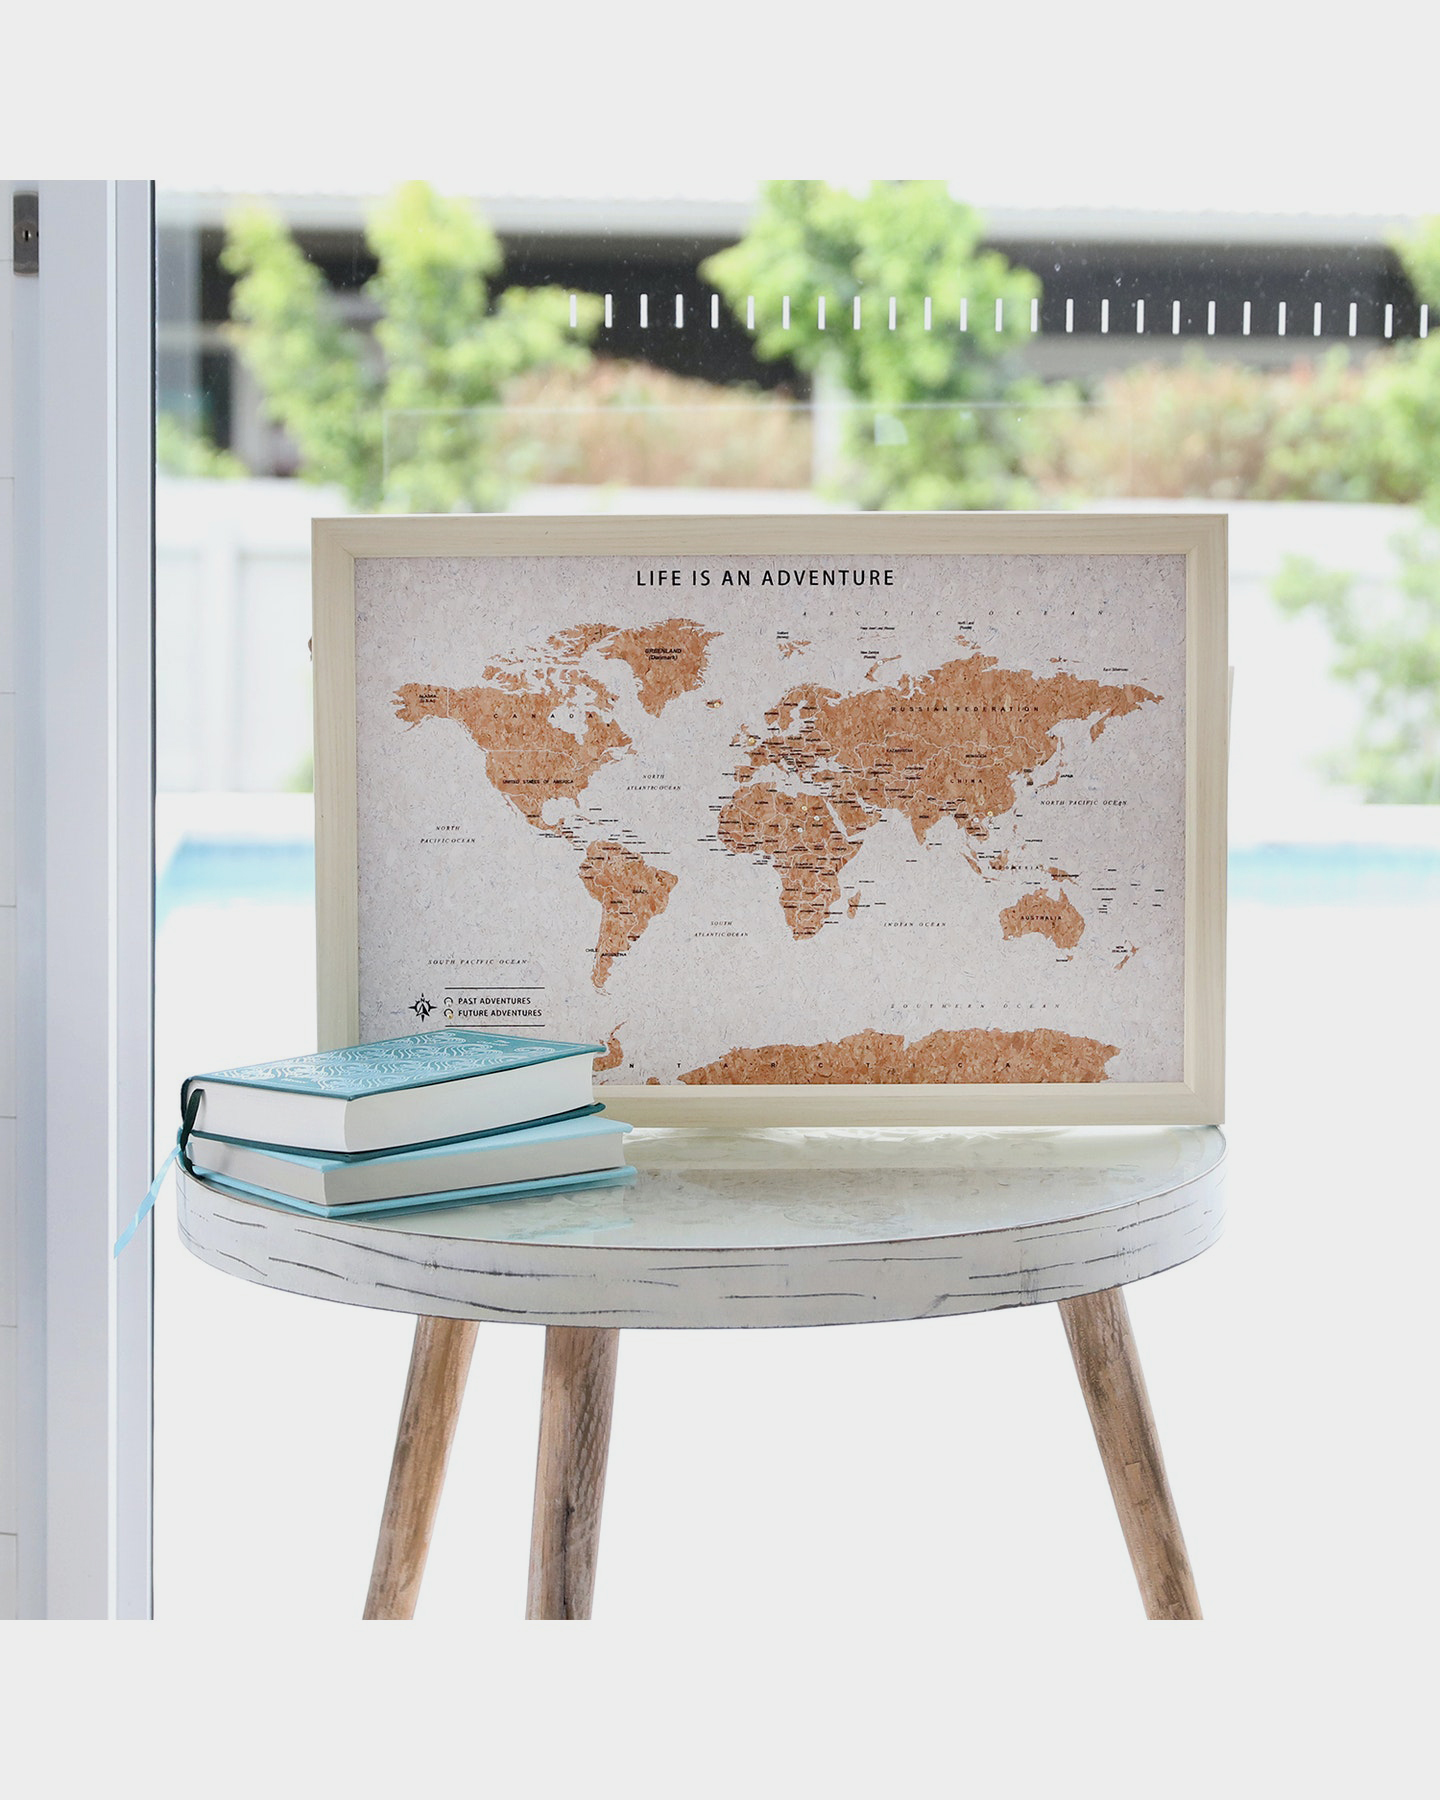 splosh world map travel board